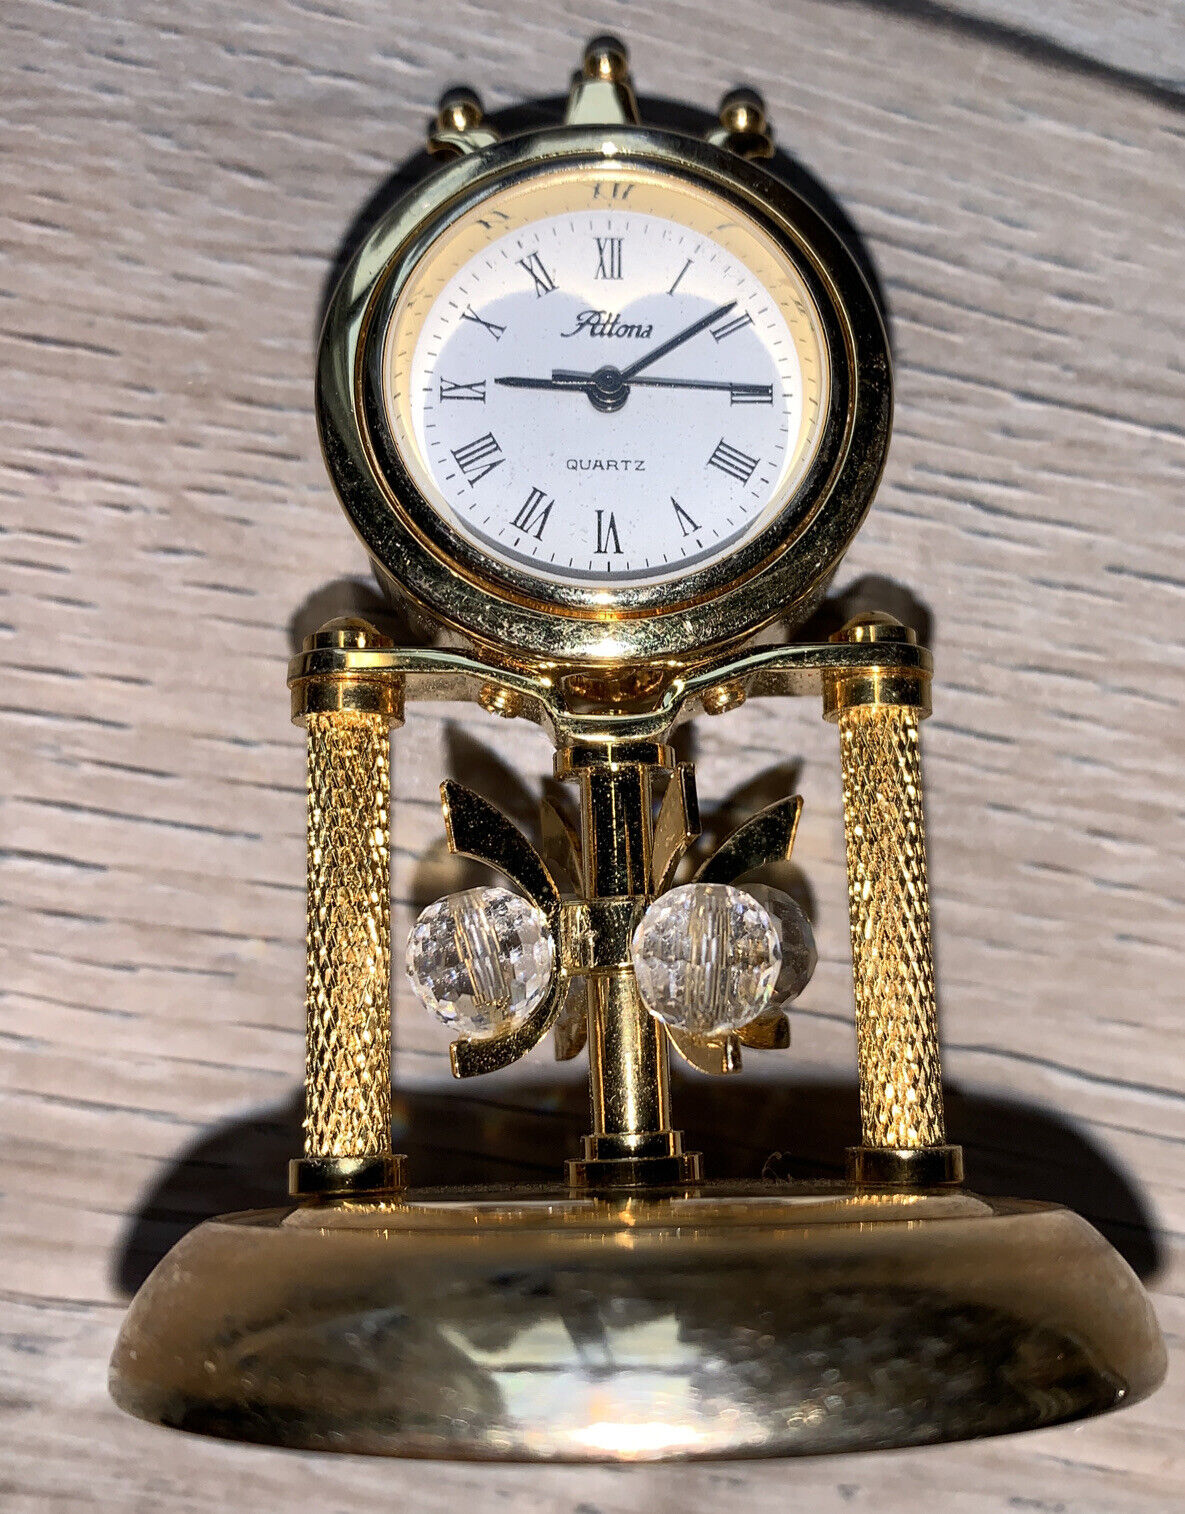 Vintage Miniature Novelty Altona Clock Paperweight Untested- Needs New Batteries